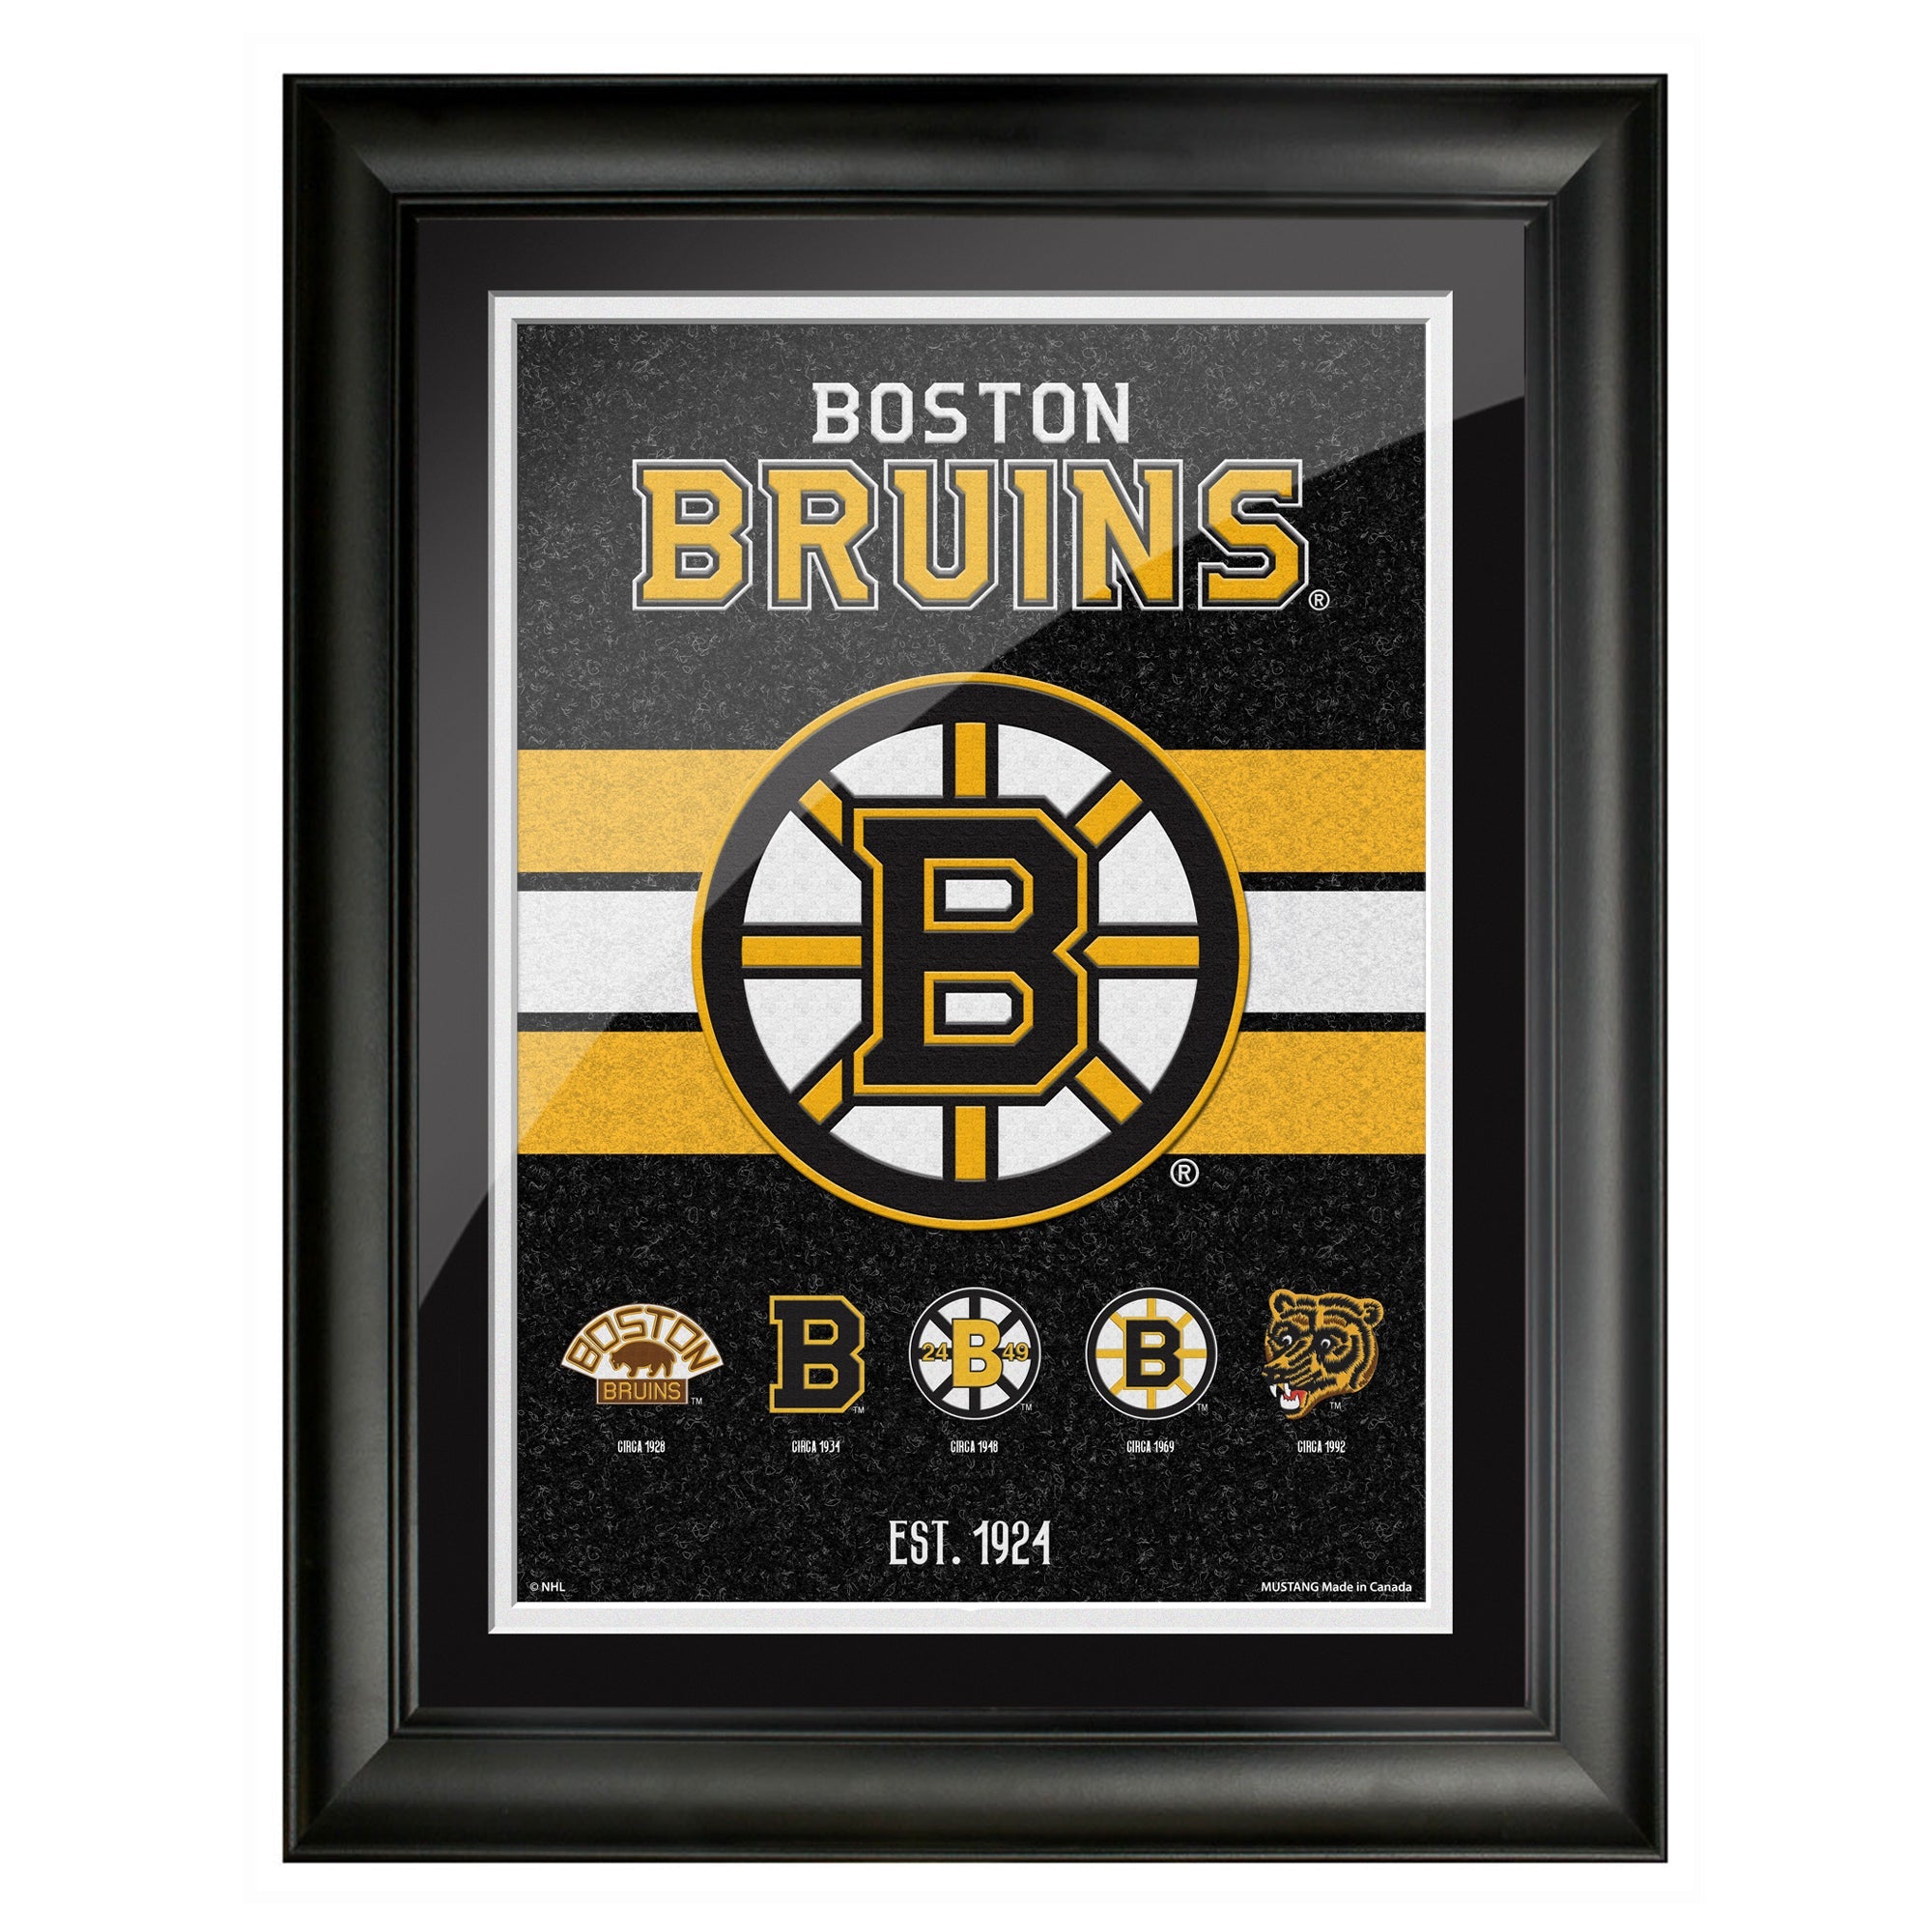 Boston Bruins 12x16 Team Tradition Framed Artwork